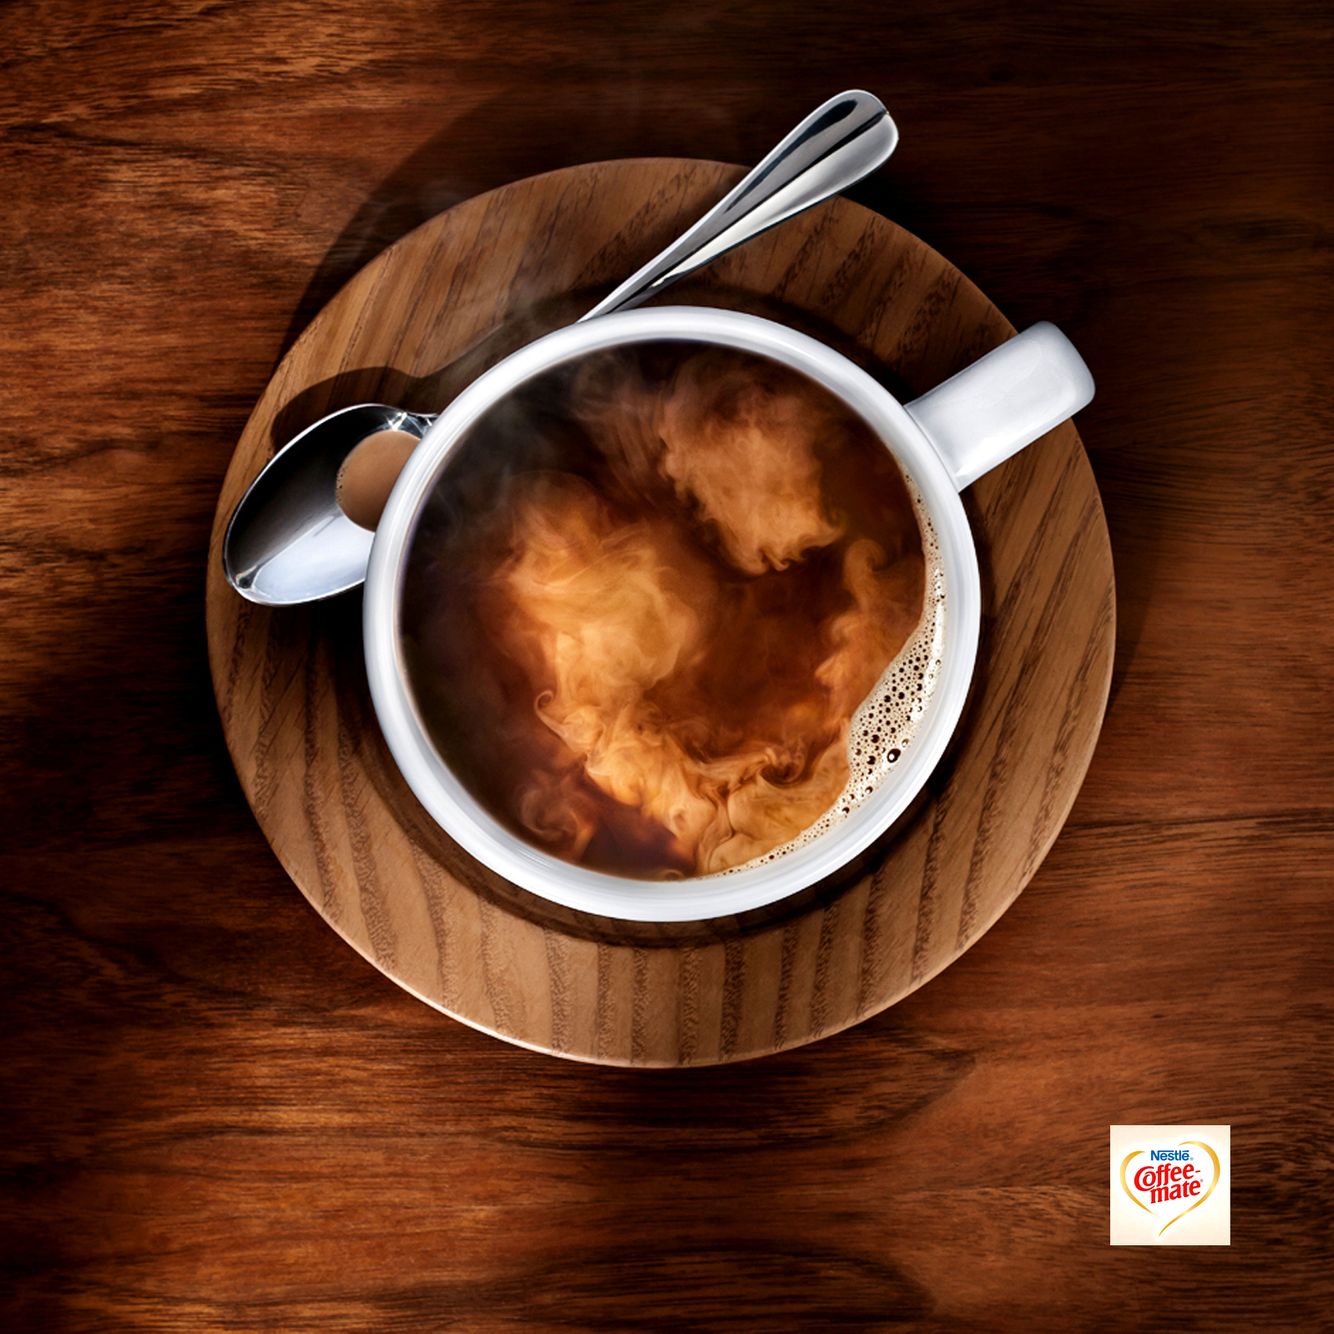 Nestles Coffee Mate print ad